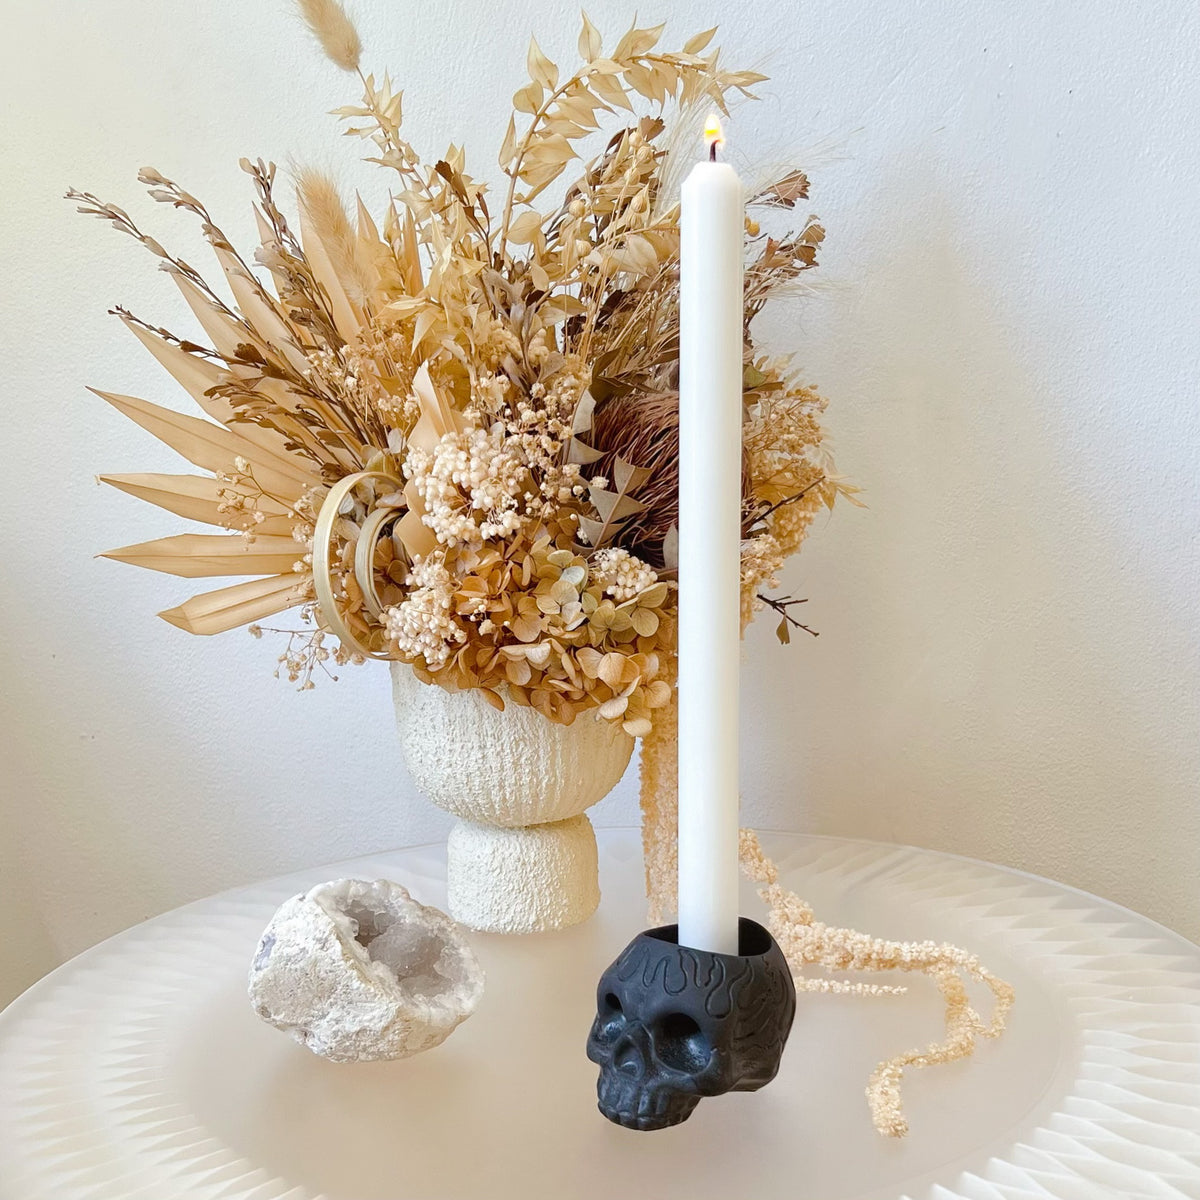 Handmade Skull Candle Holder, Halloween Gift - LMJ Candles